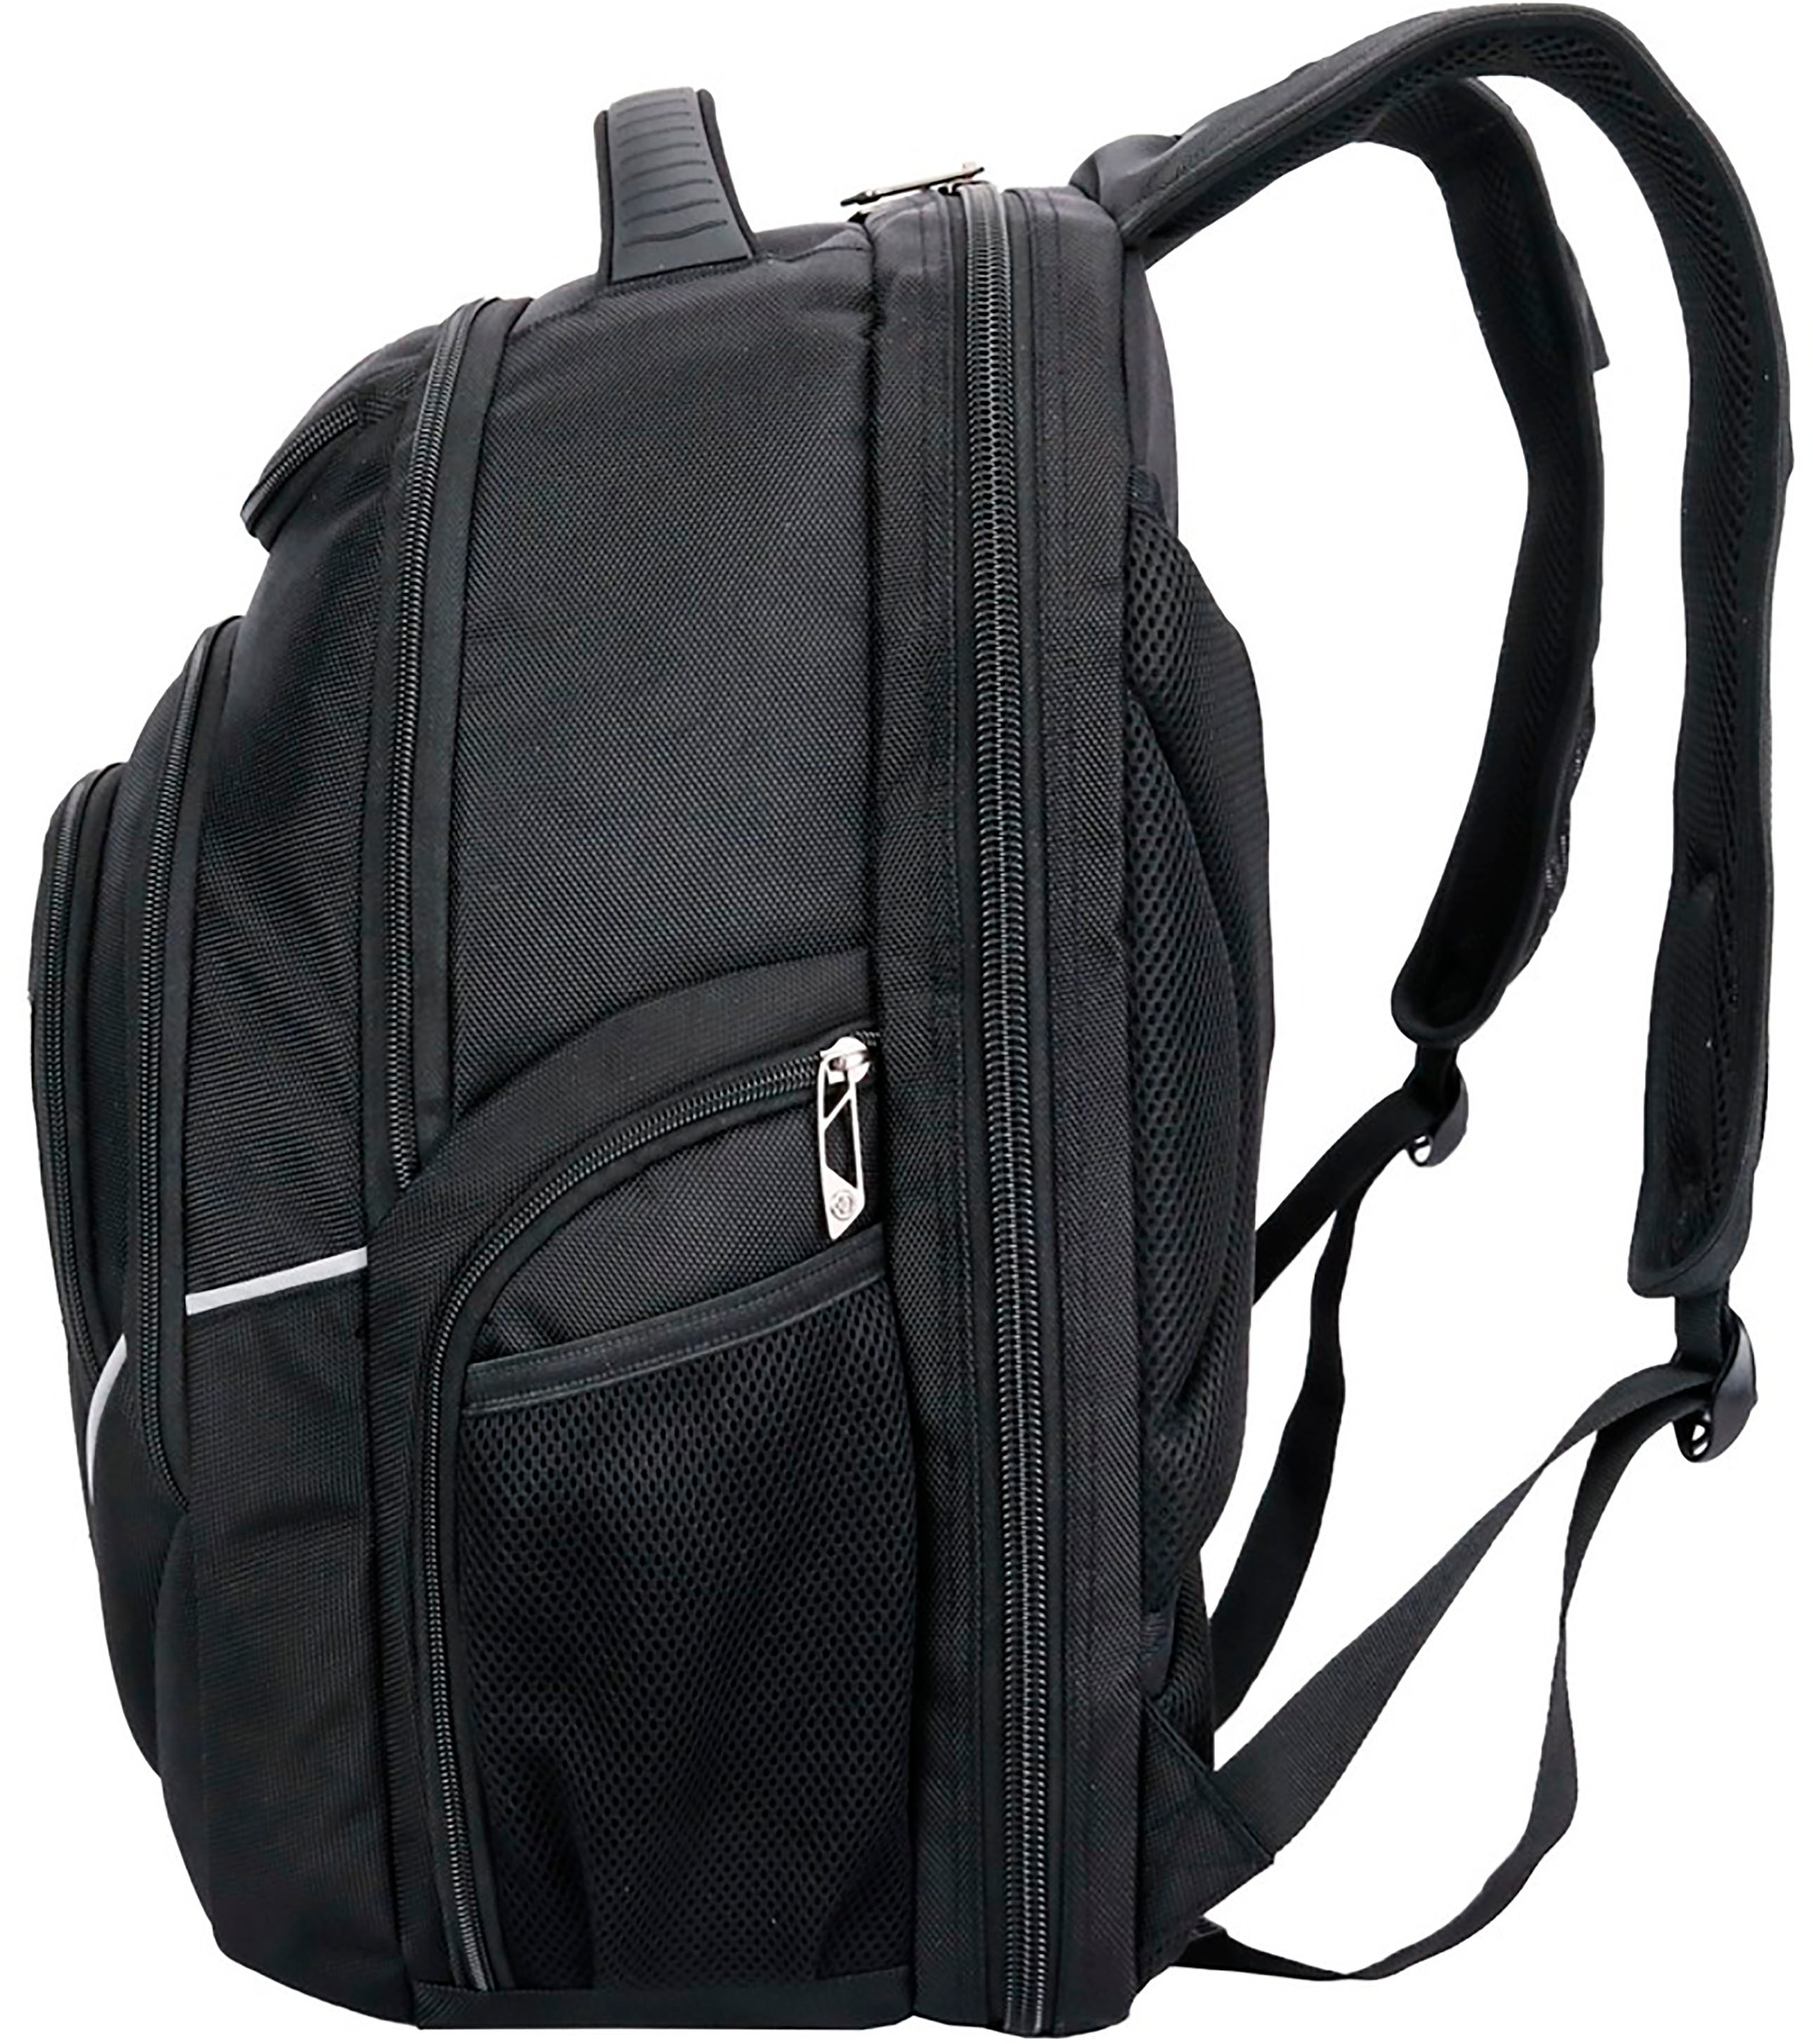 Swissdigital Remi Laptop Backpack w/ Smart USB Charge Port, for Sale in  Bakersfield, CA - OfferUp